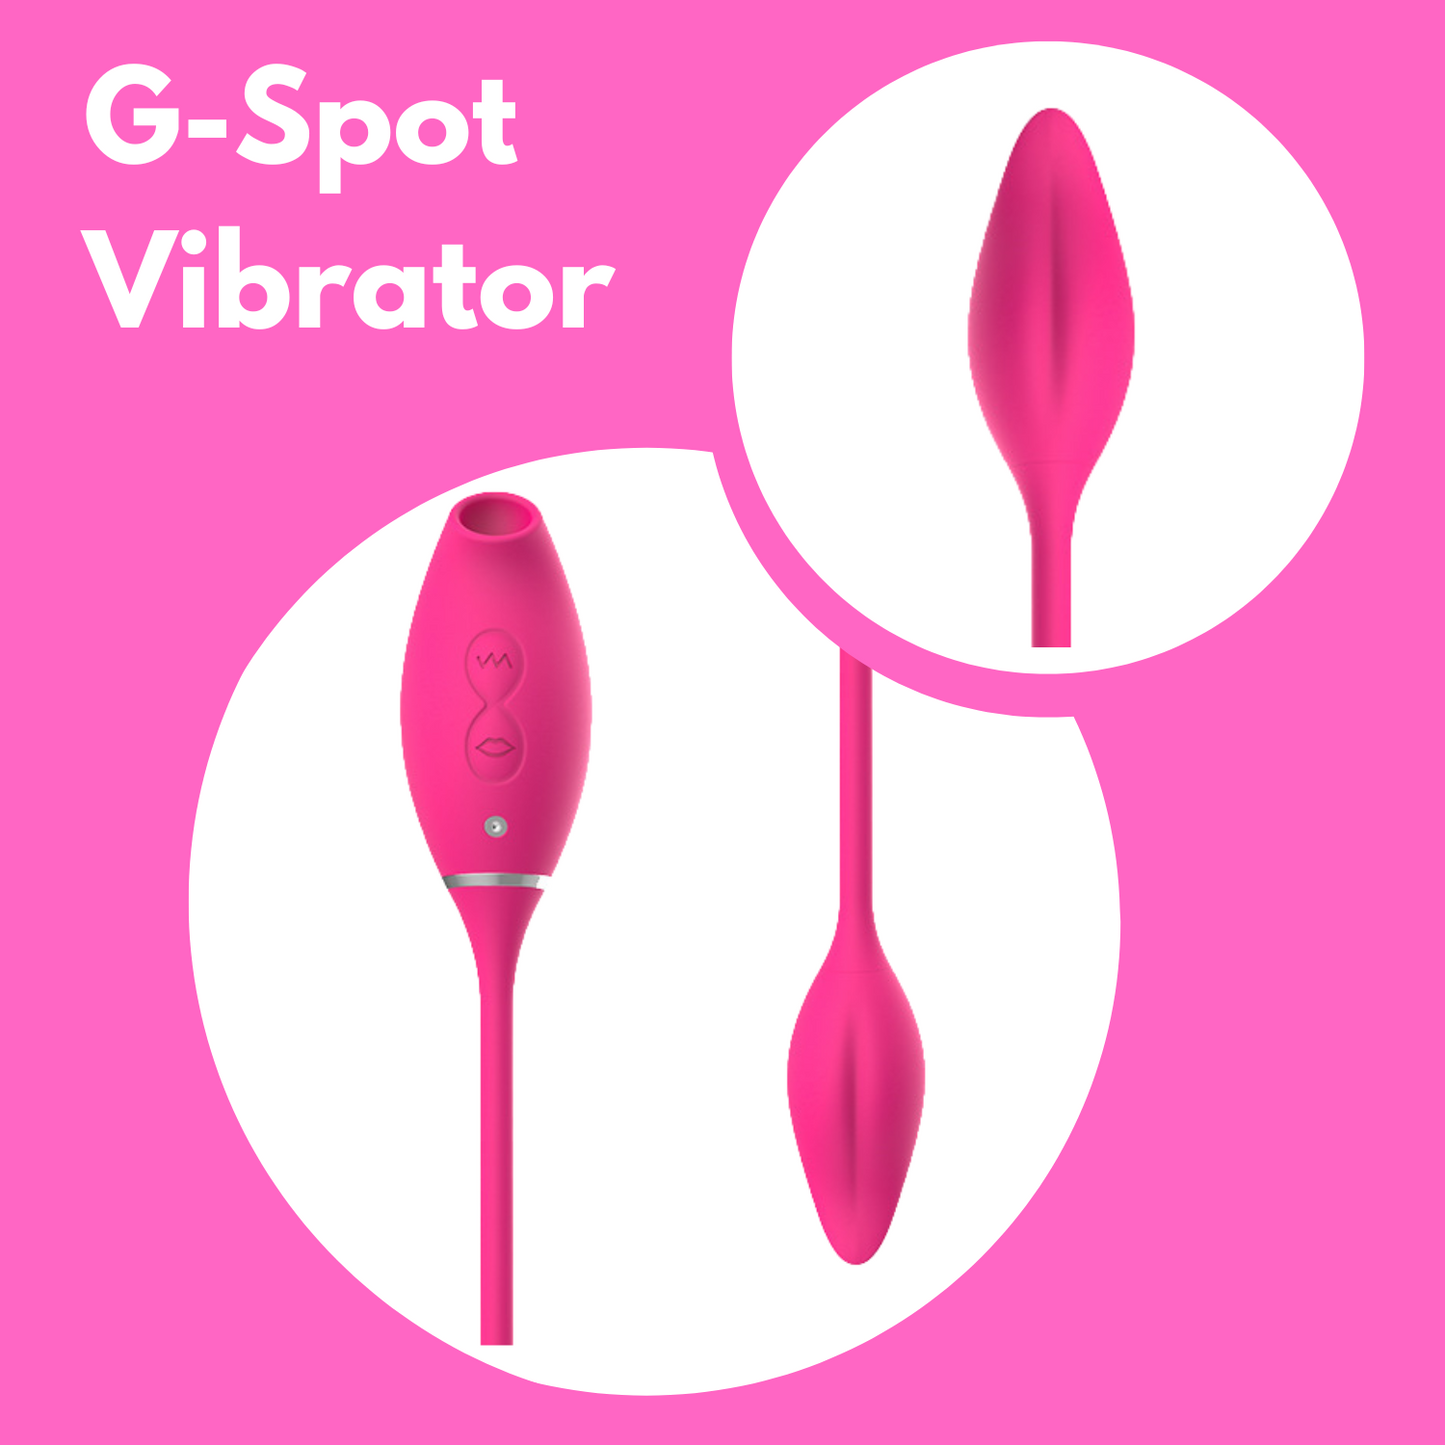 Clitoral Suction Stimulator with G-Spot Vibrator